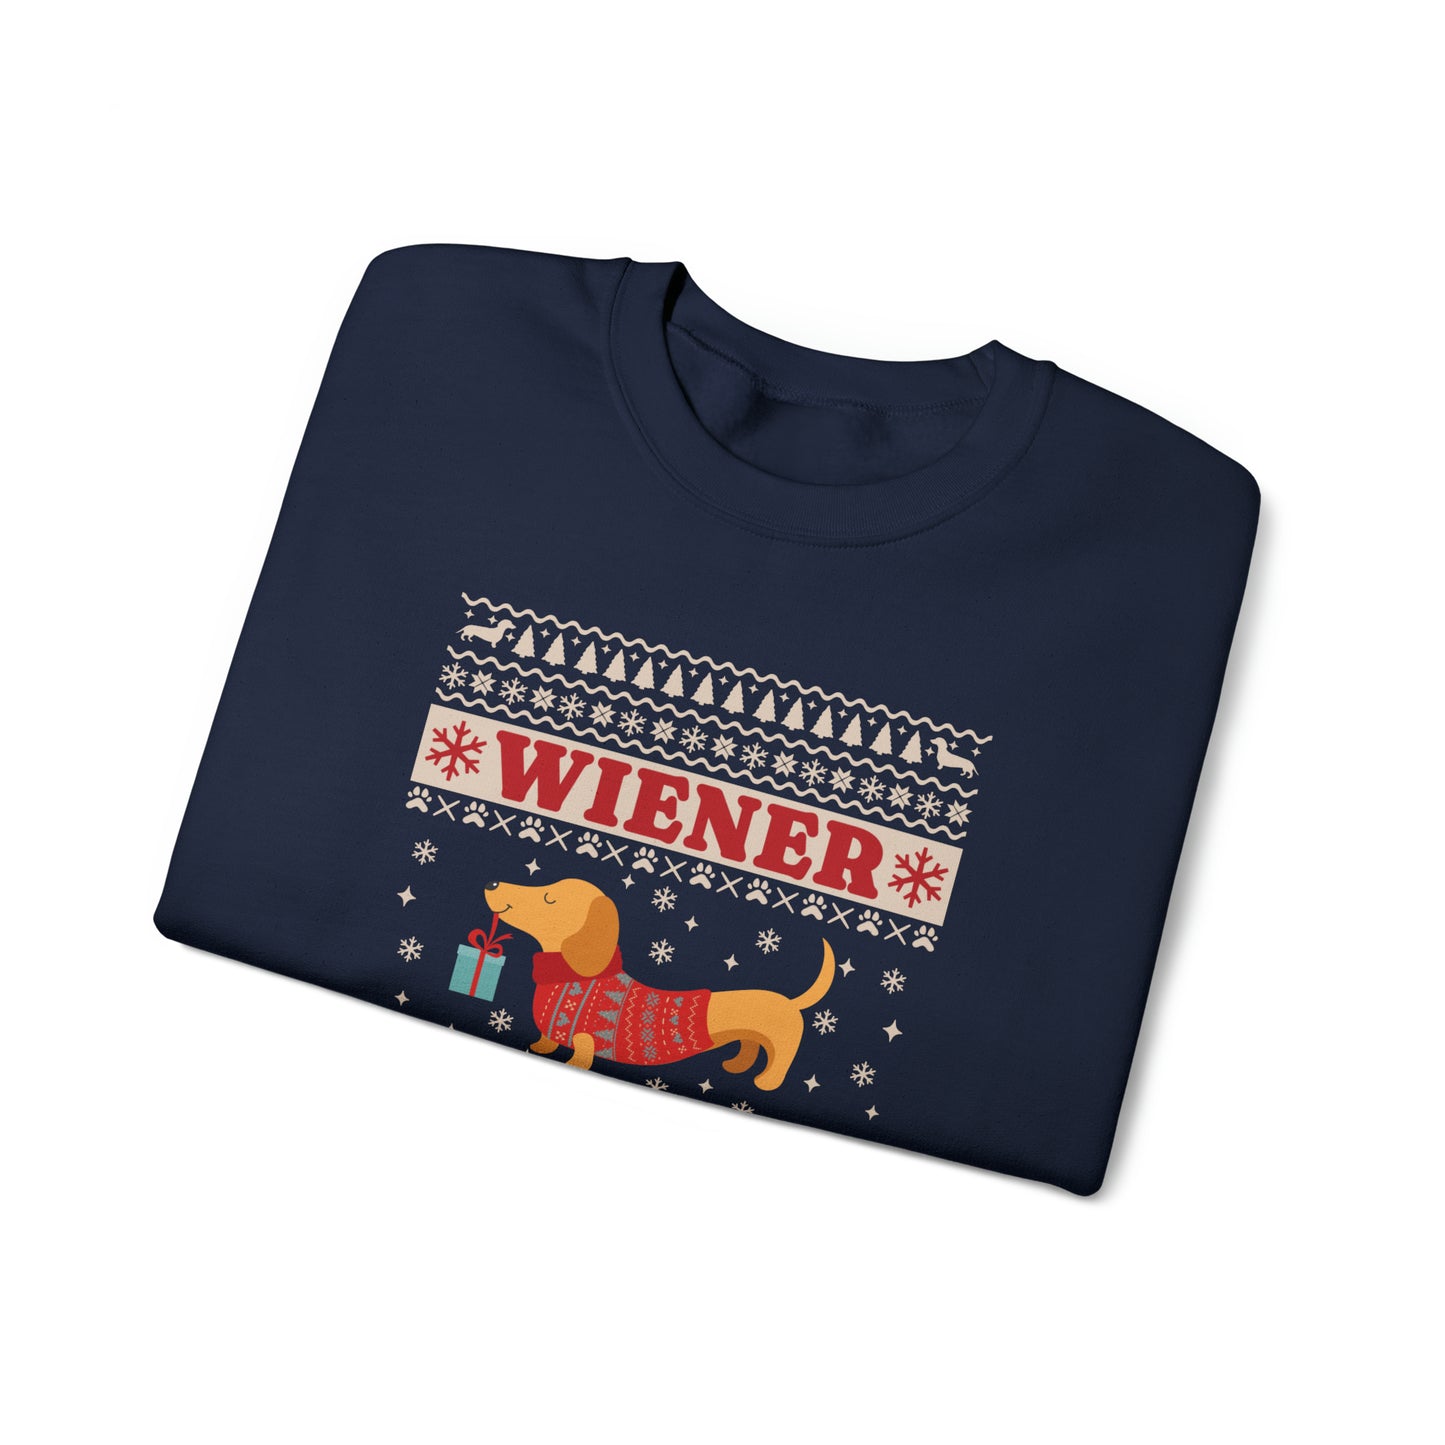 Dachshund Christmas Sweatshirt - Wiener Wonderland - Dachshund Gift